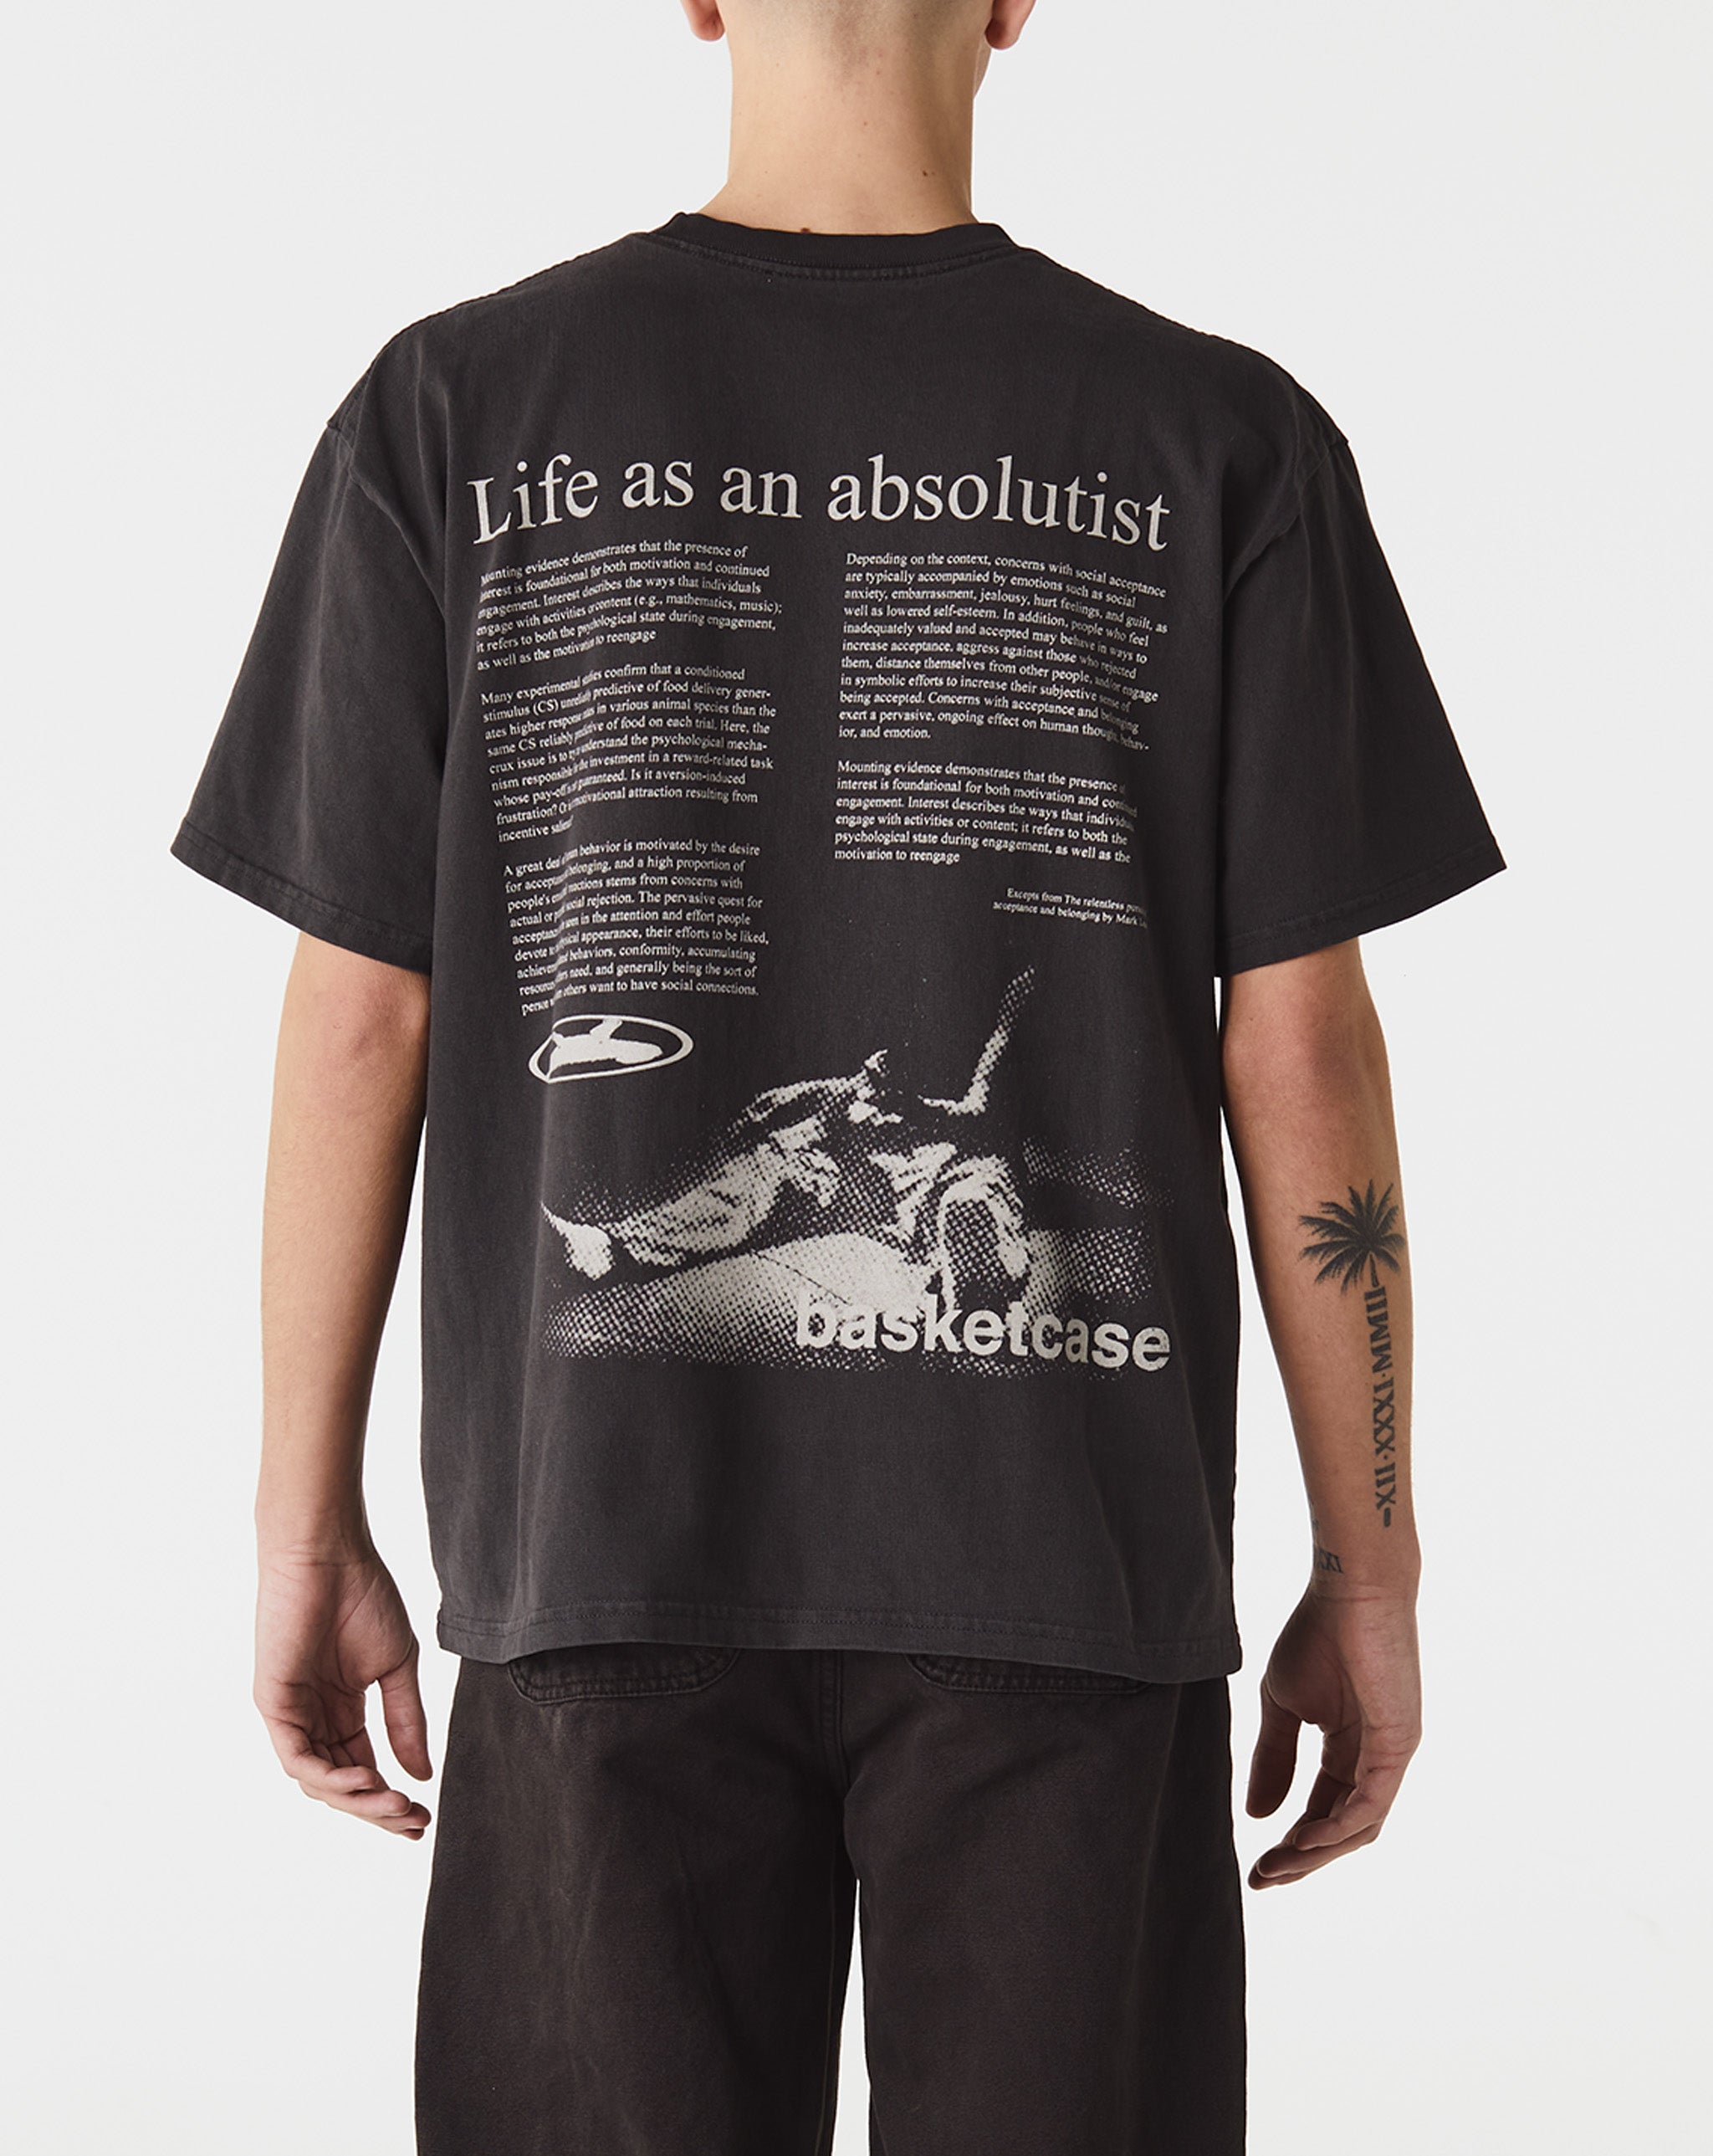 Basketcase Gallery Euphemism T-Shirt  - XHIBITION